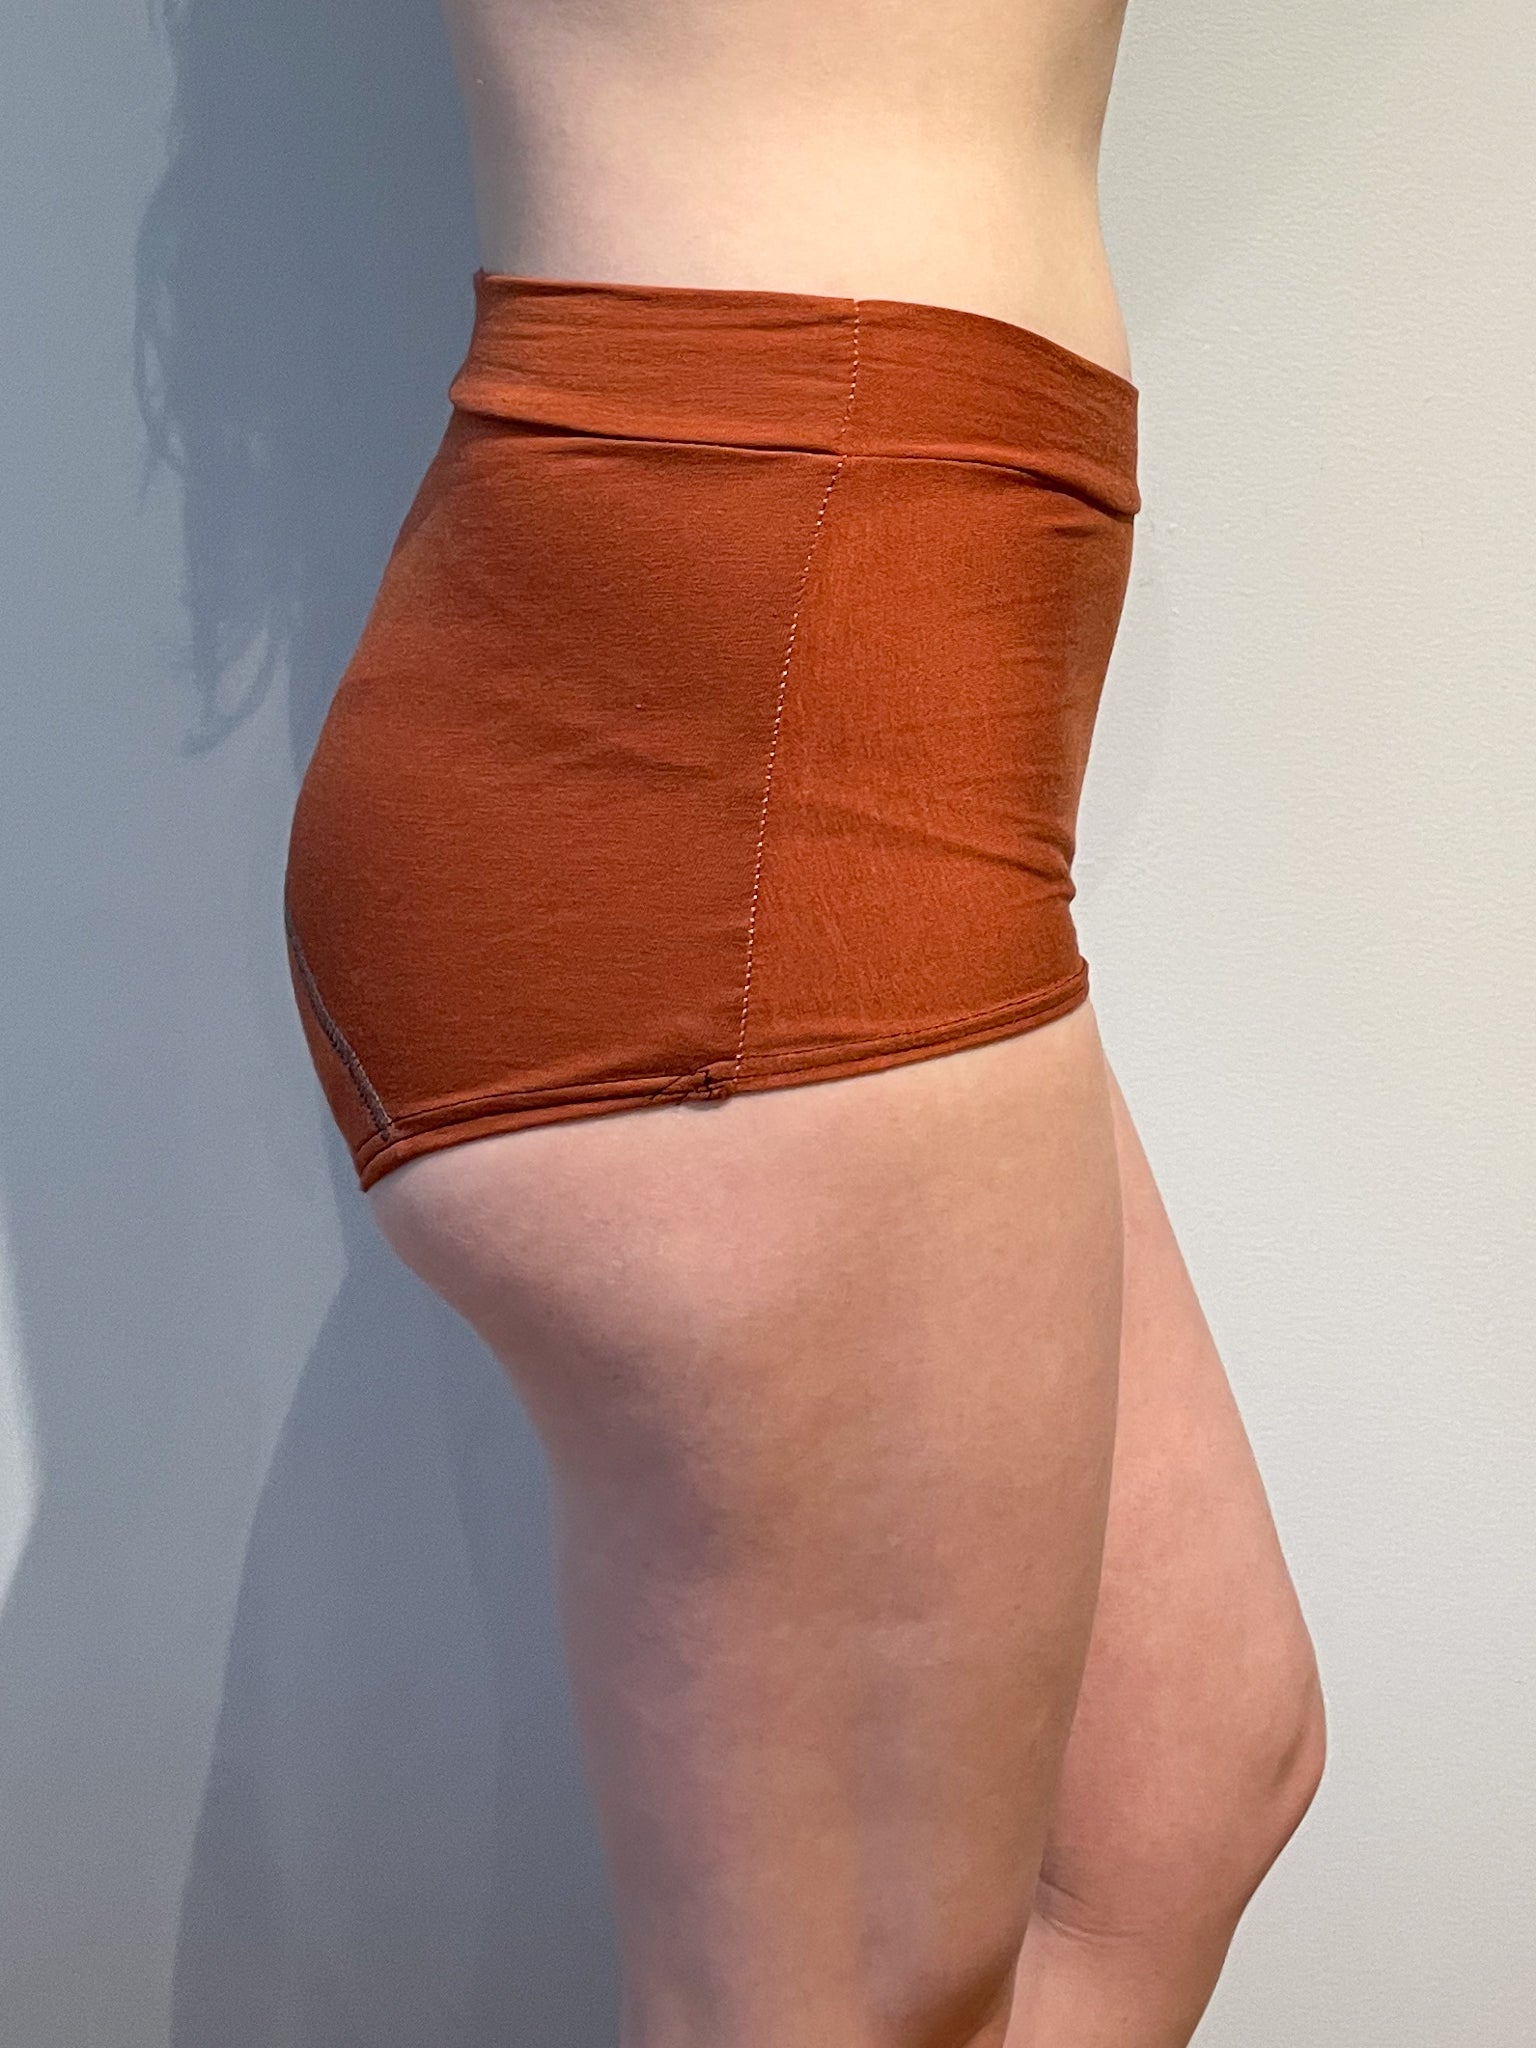 XMMSWDLA Bambody Absorbent Panty: Period Underwear for Women - Bamboo Soft  Maternity & Postpartum Period Panties Menstrual Pink 6XL Period Underwear